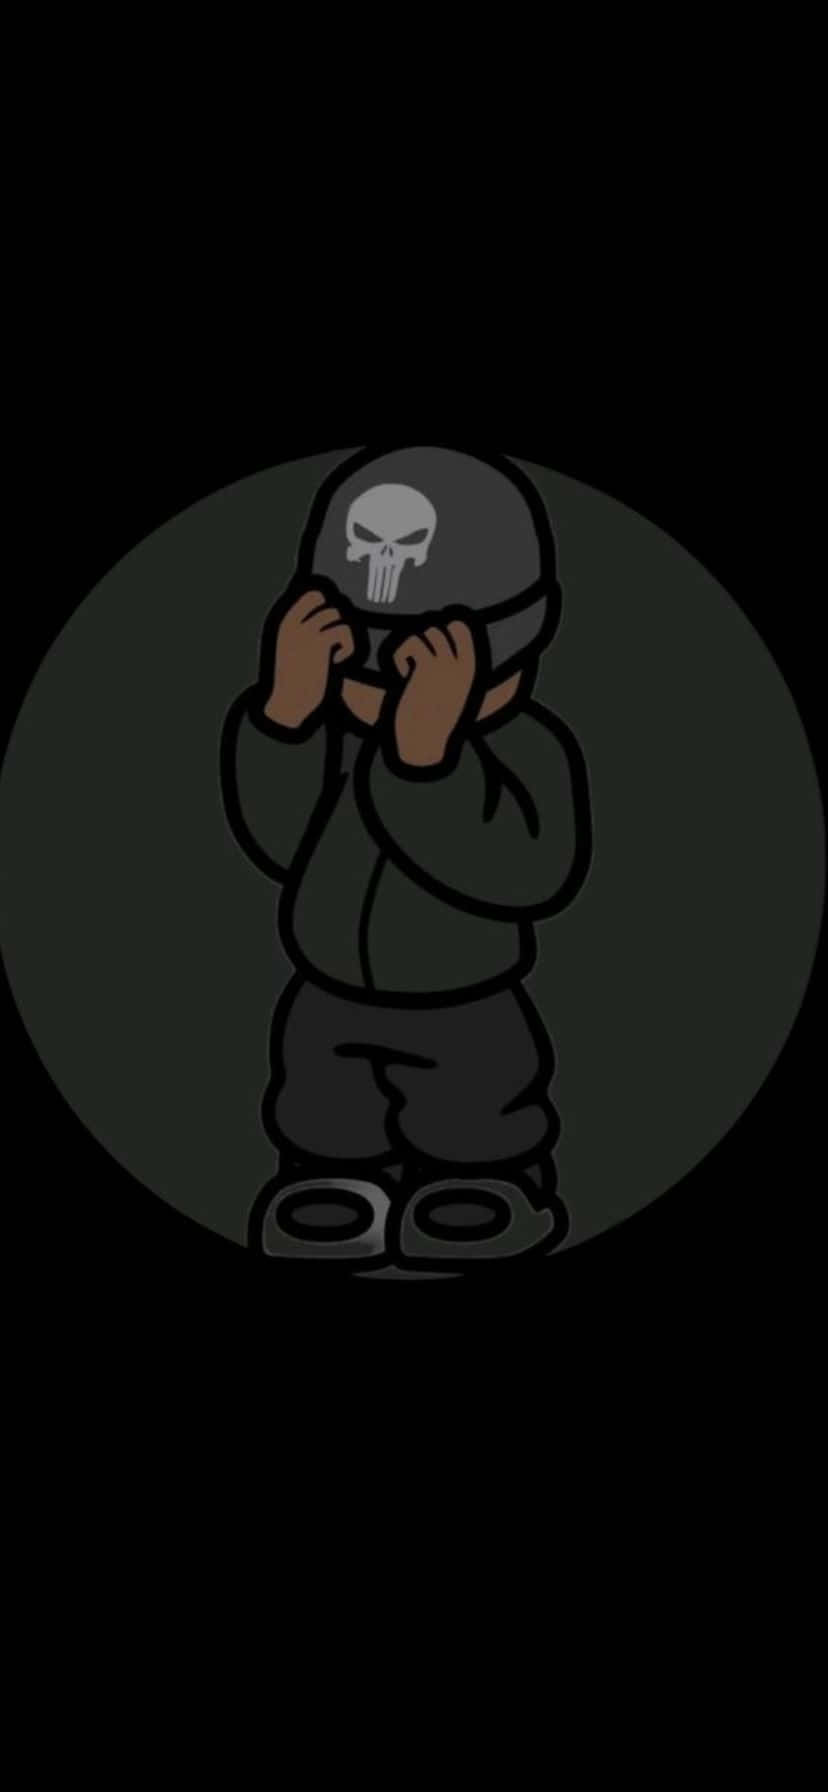 Punisher Logo Hoodie Character Profile Wallpaper